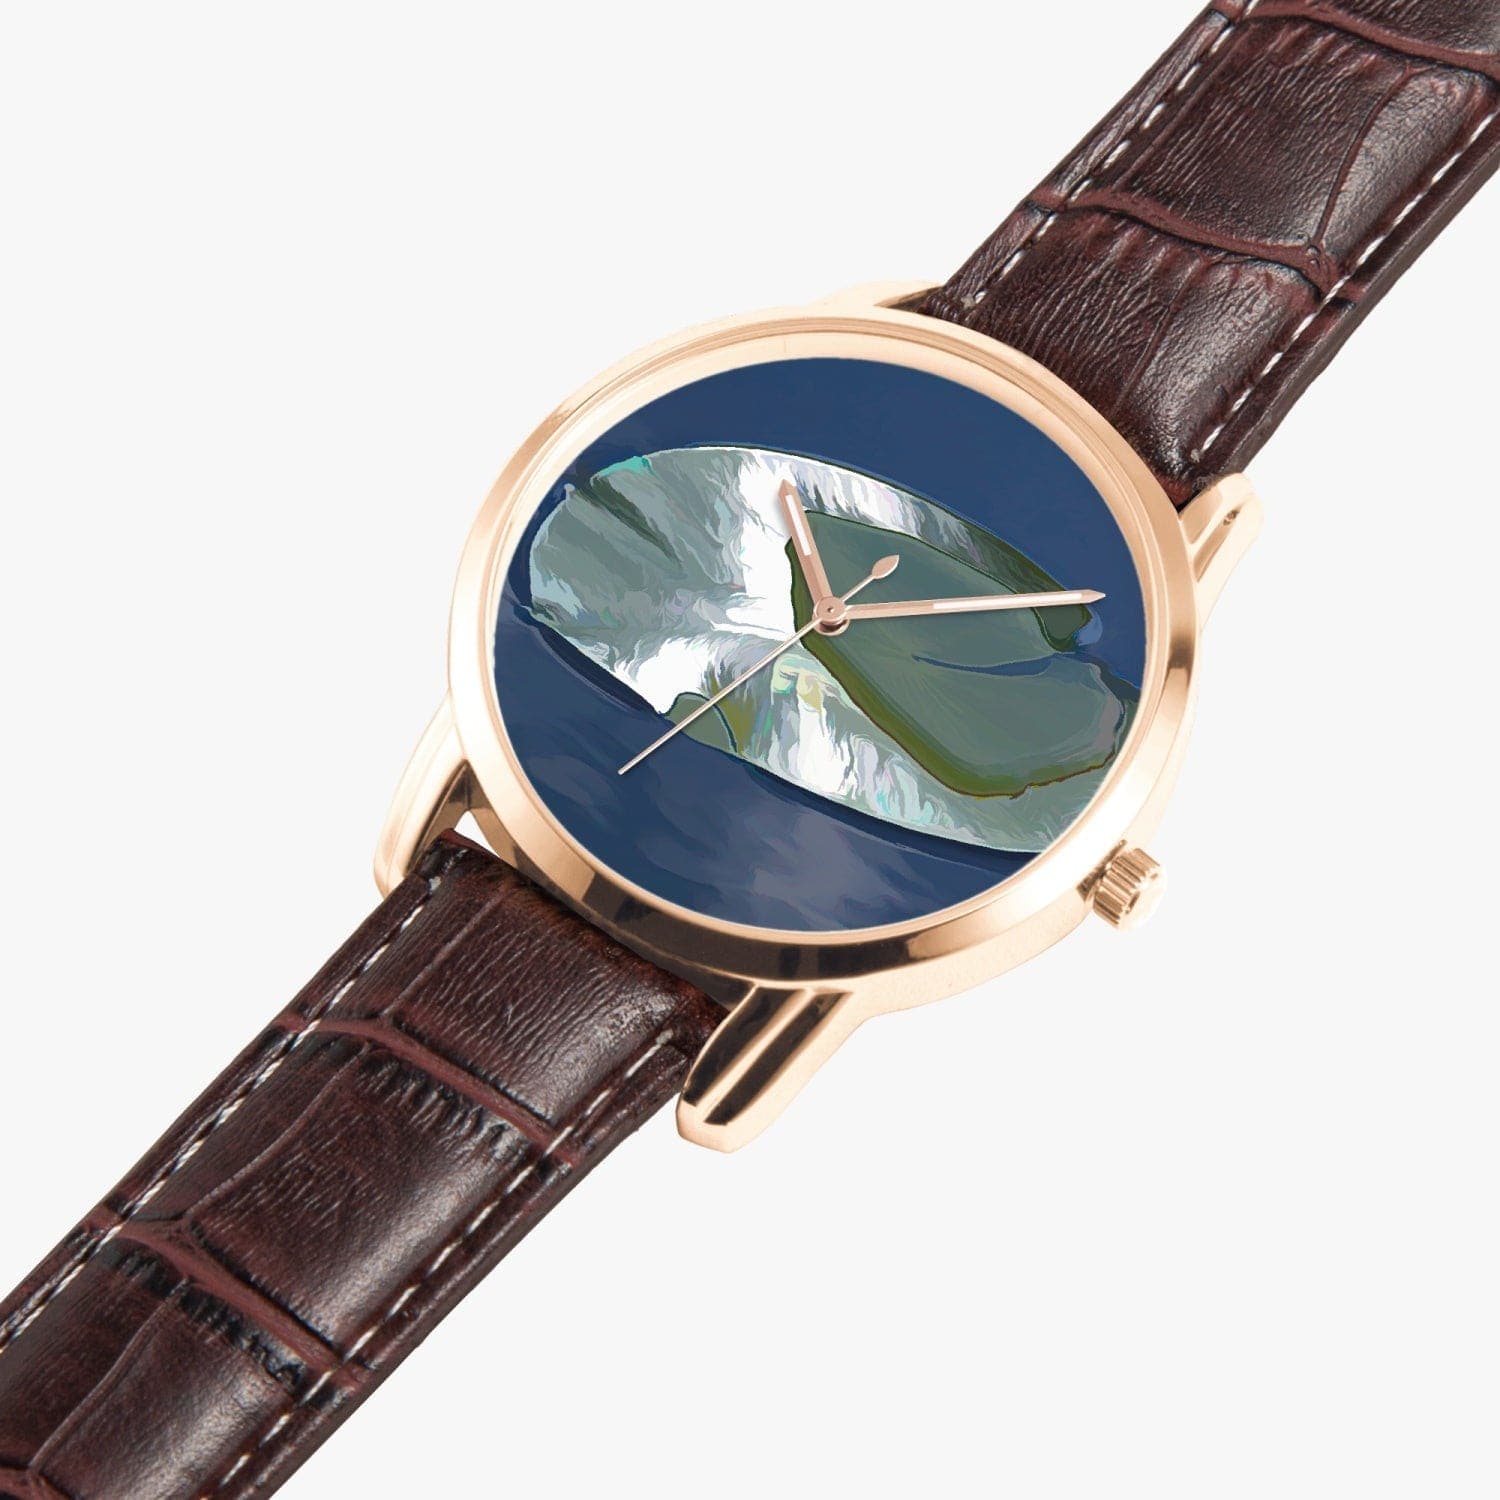 Water lily leaf,  Instafamous Wide Type Quartz watch, designed by Sensus Studio Design